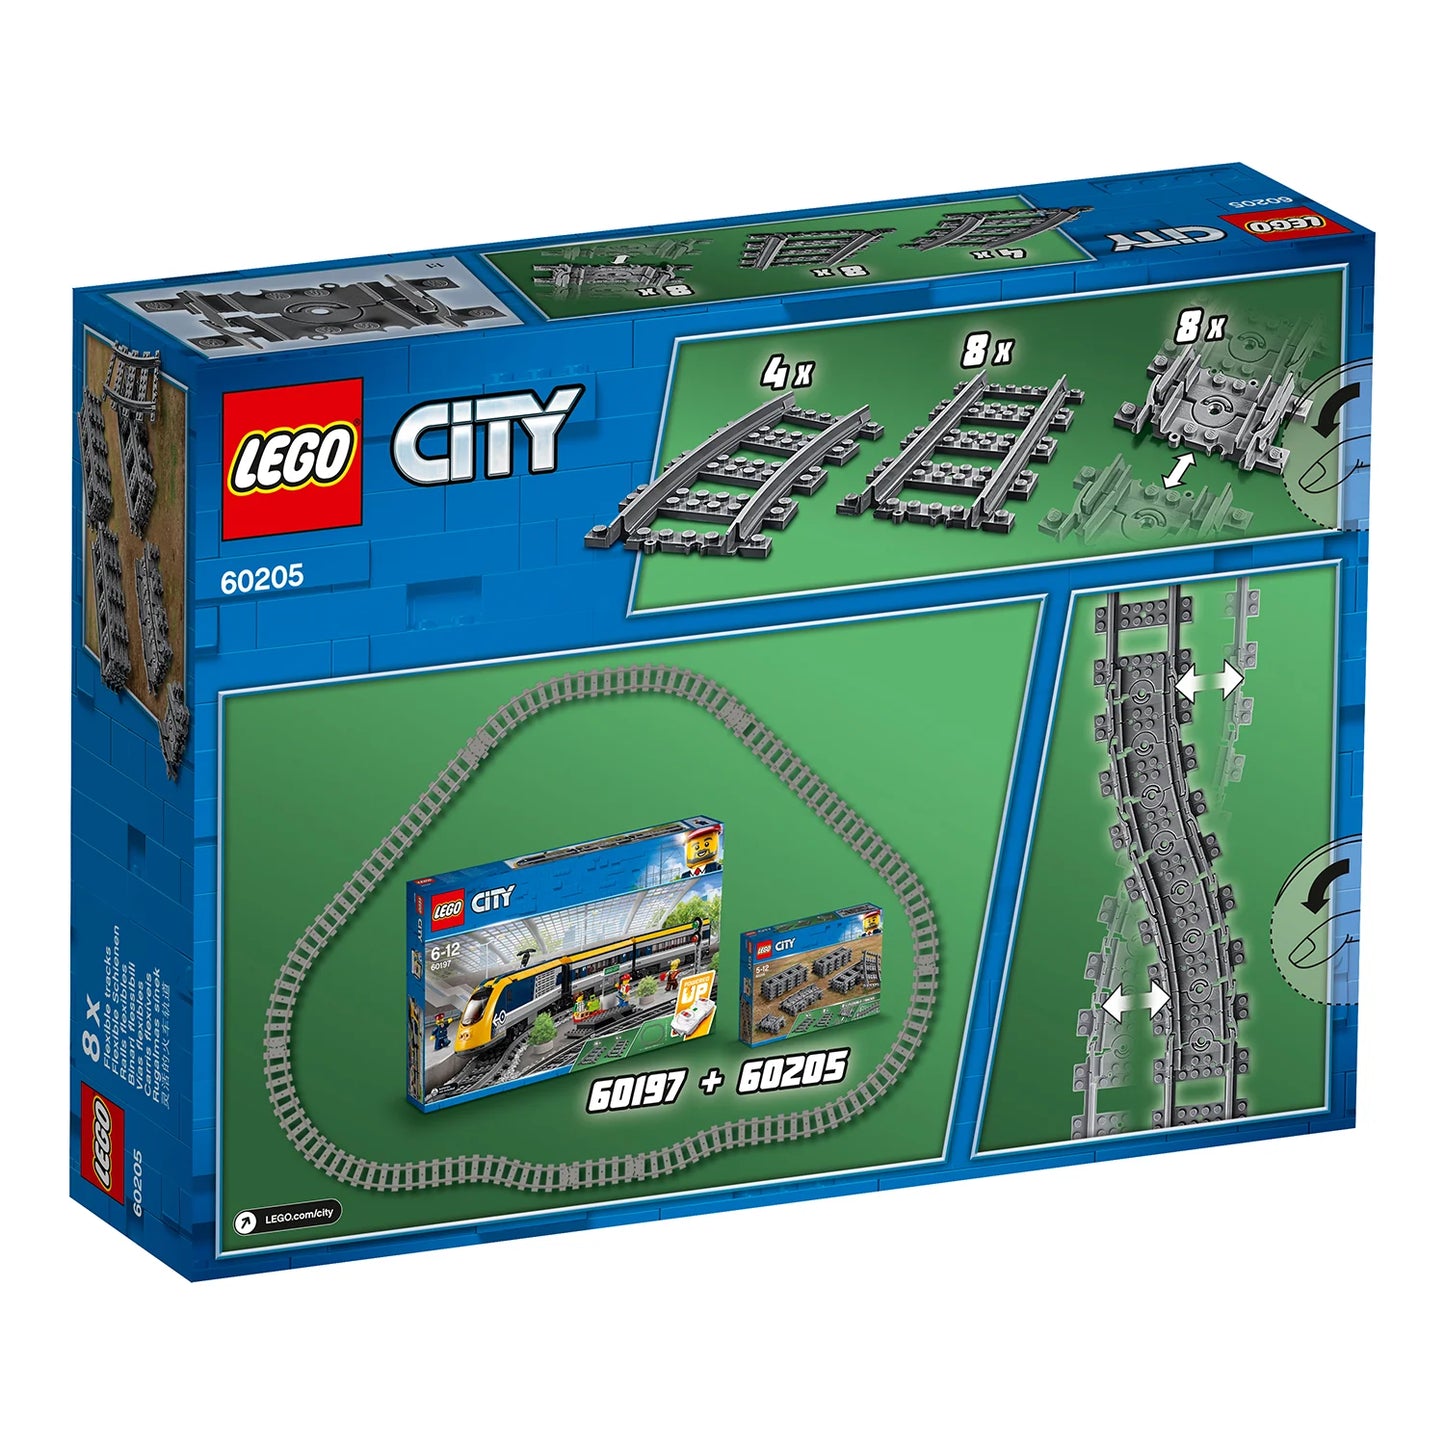 Train tracks (formerly 7499) - LEGO City